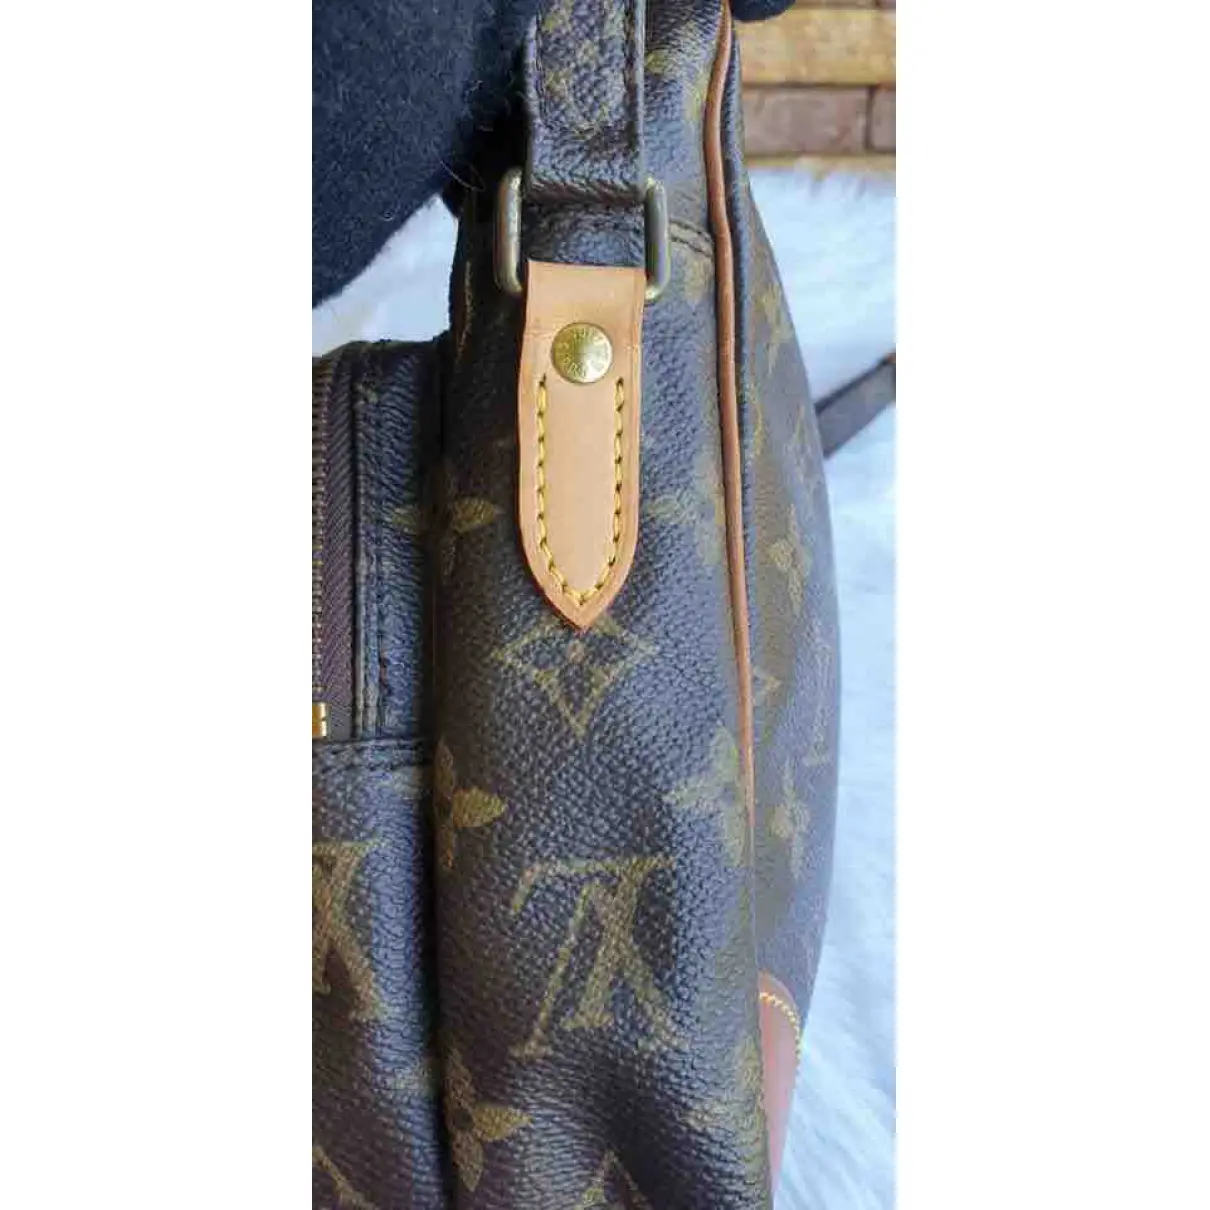 Buy Louis Vuitton Amazon cloth crossbody bag online